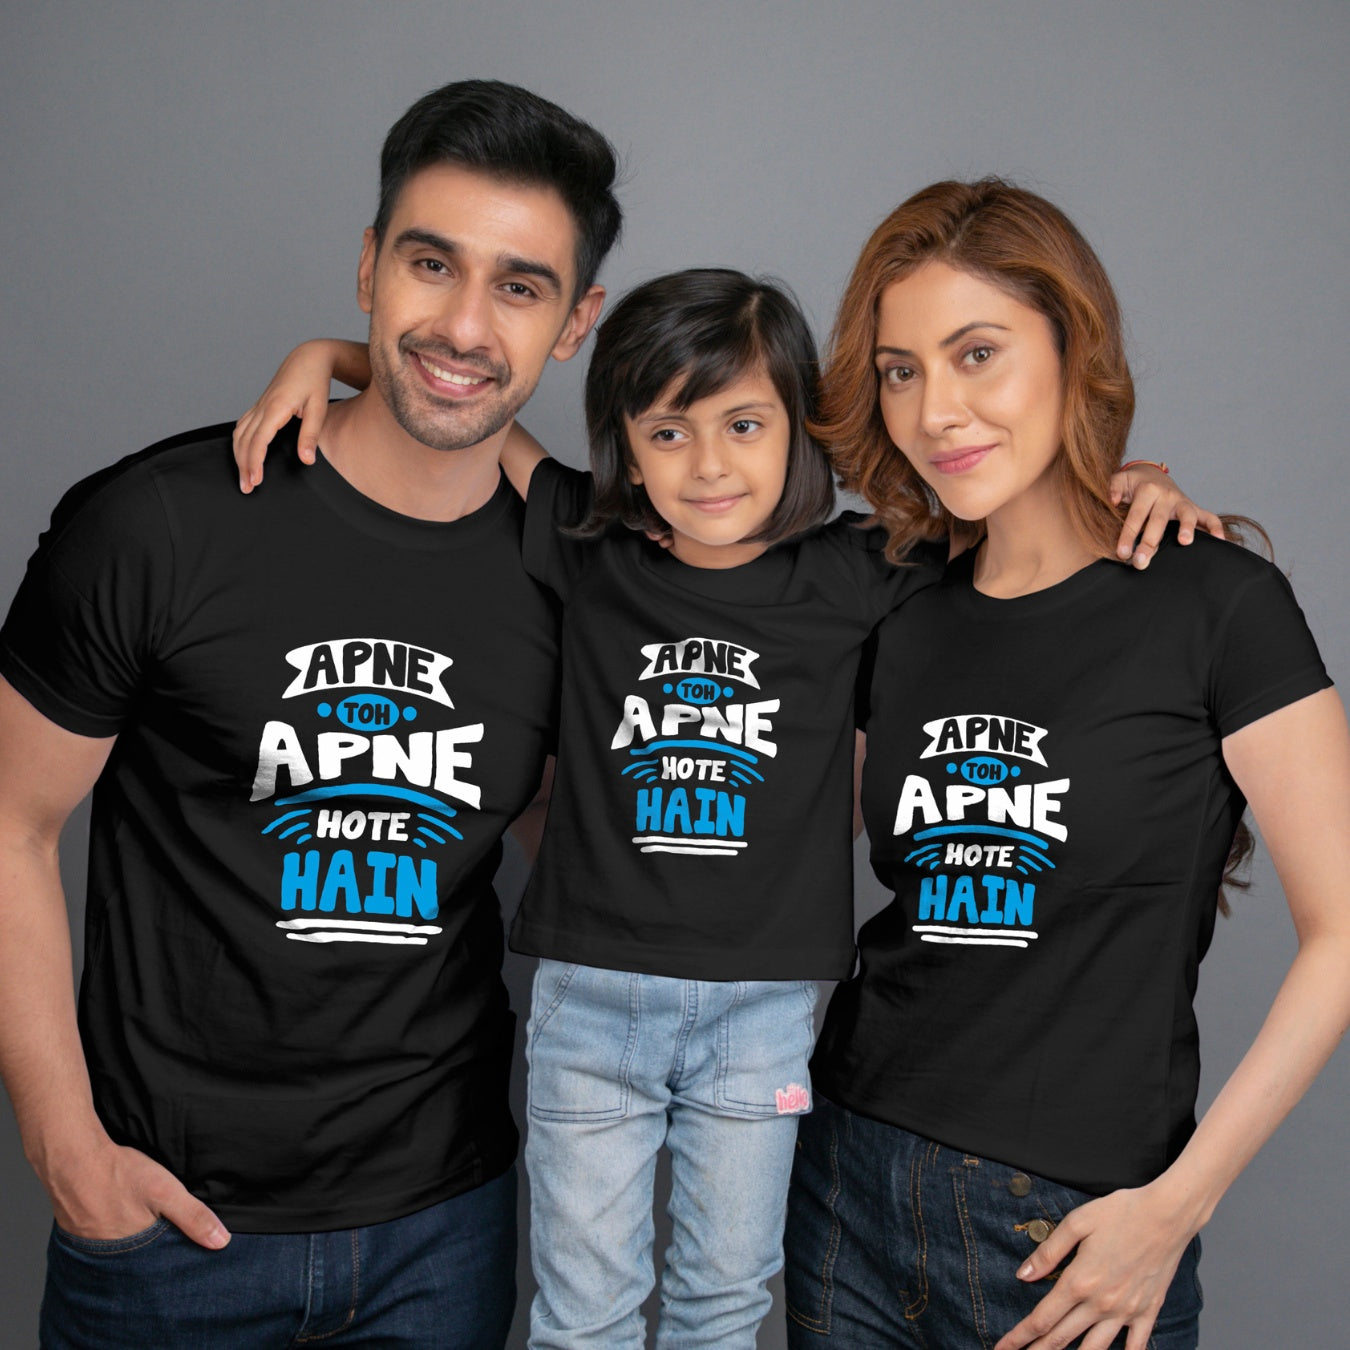 Family t shirt set of 3 Mom Dad Daughter in Black Colour - Apne Toh Apne Hote Hain Variant